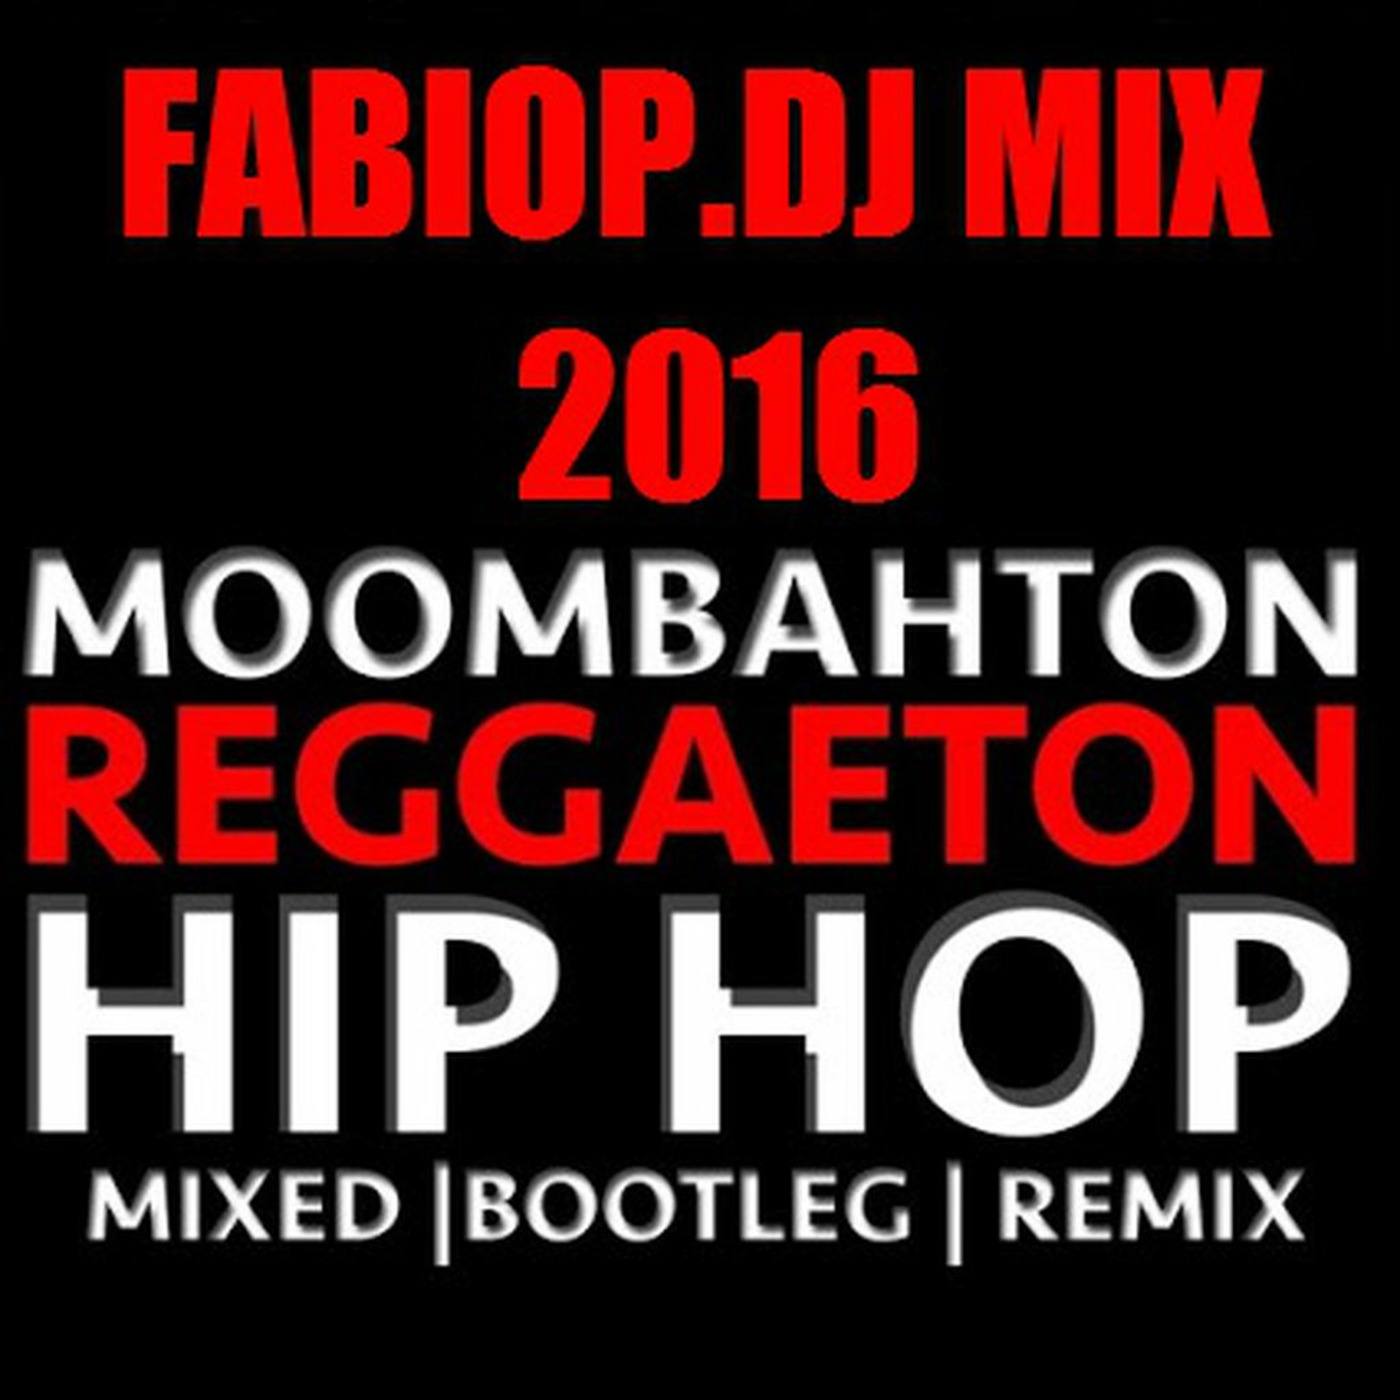 FABIOP.DJ MIX 2016 HIP HOP RAGGEATON MOOMBAHTON